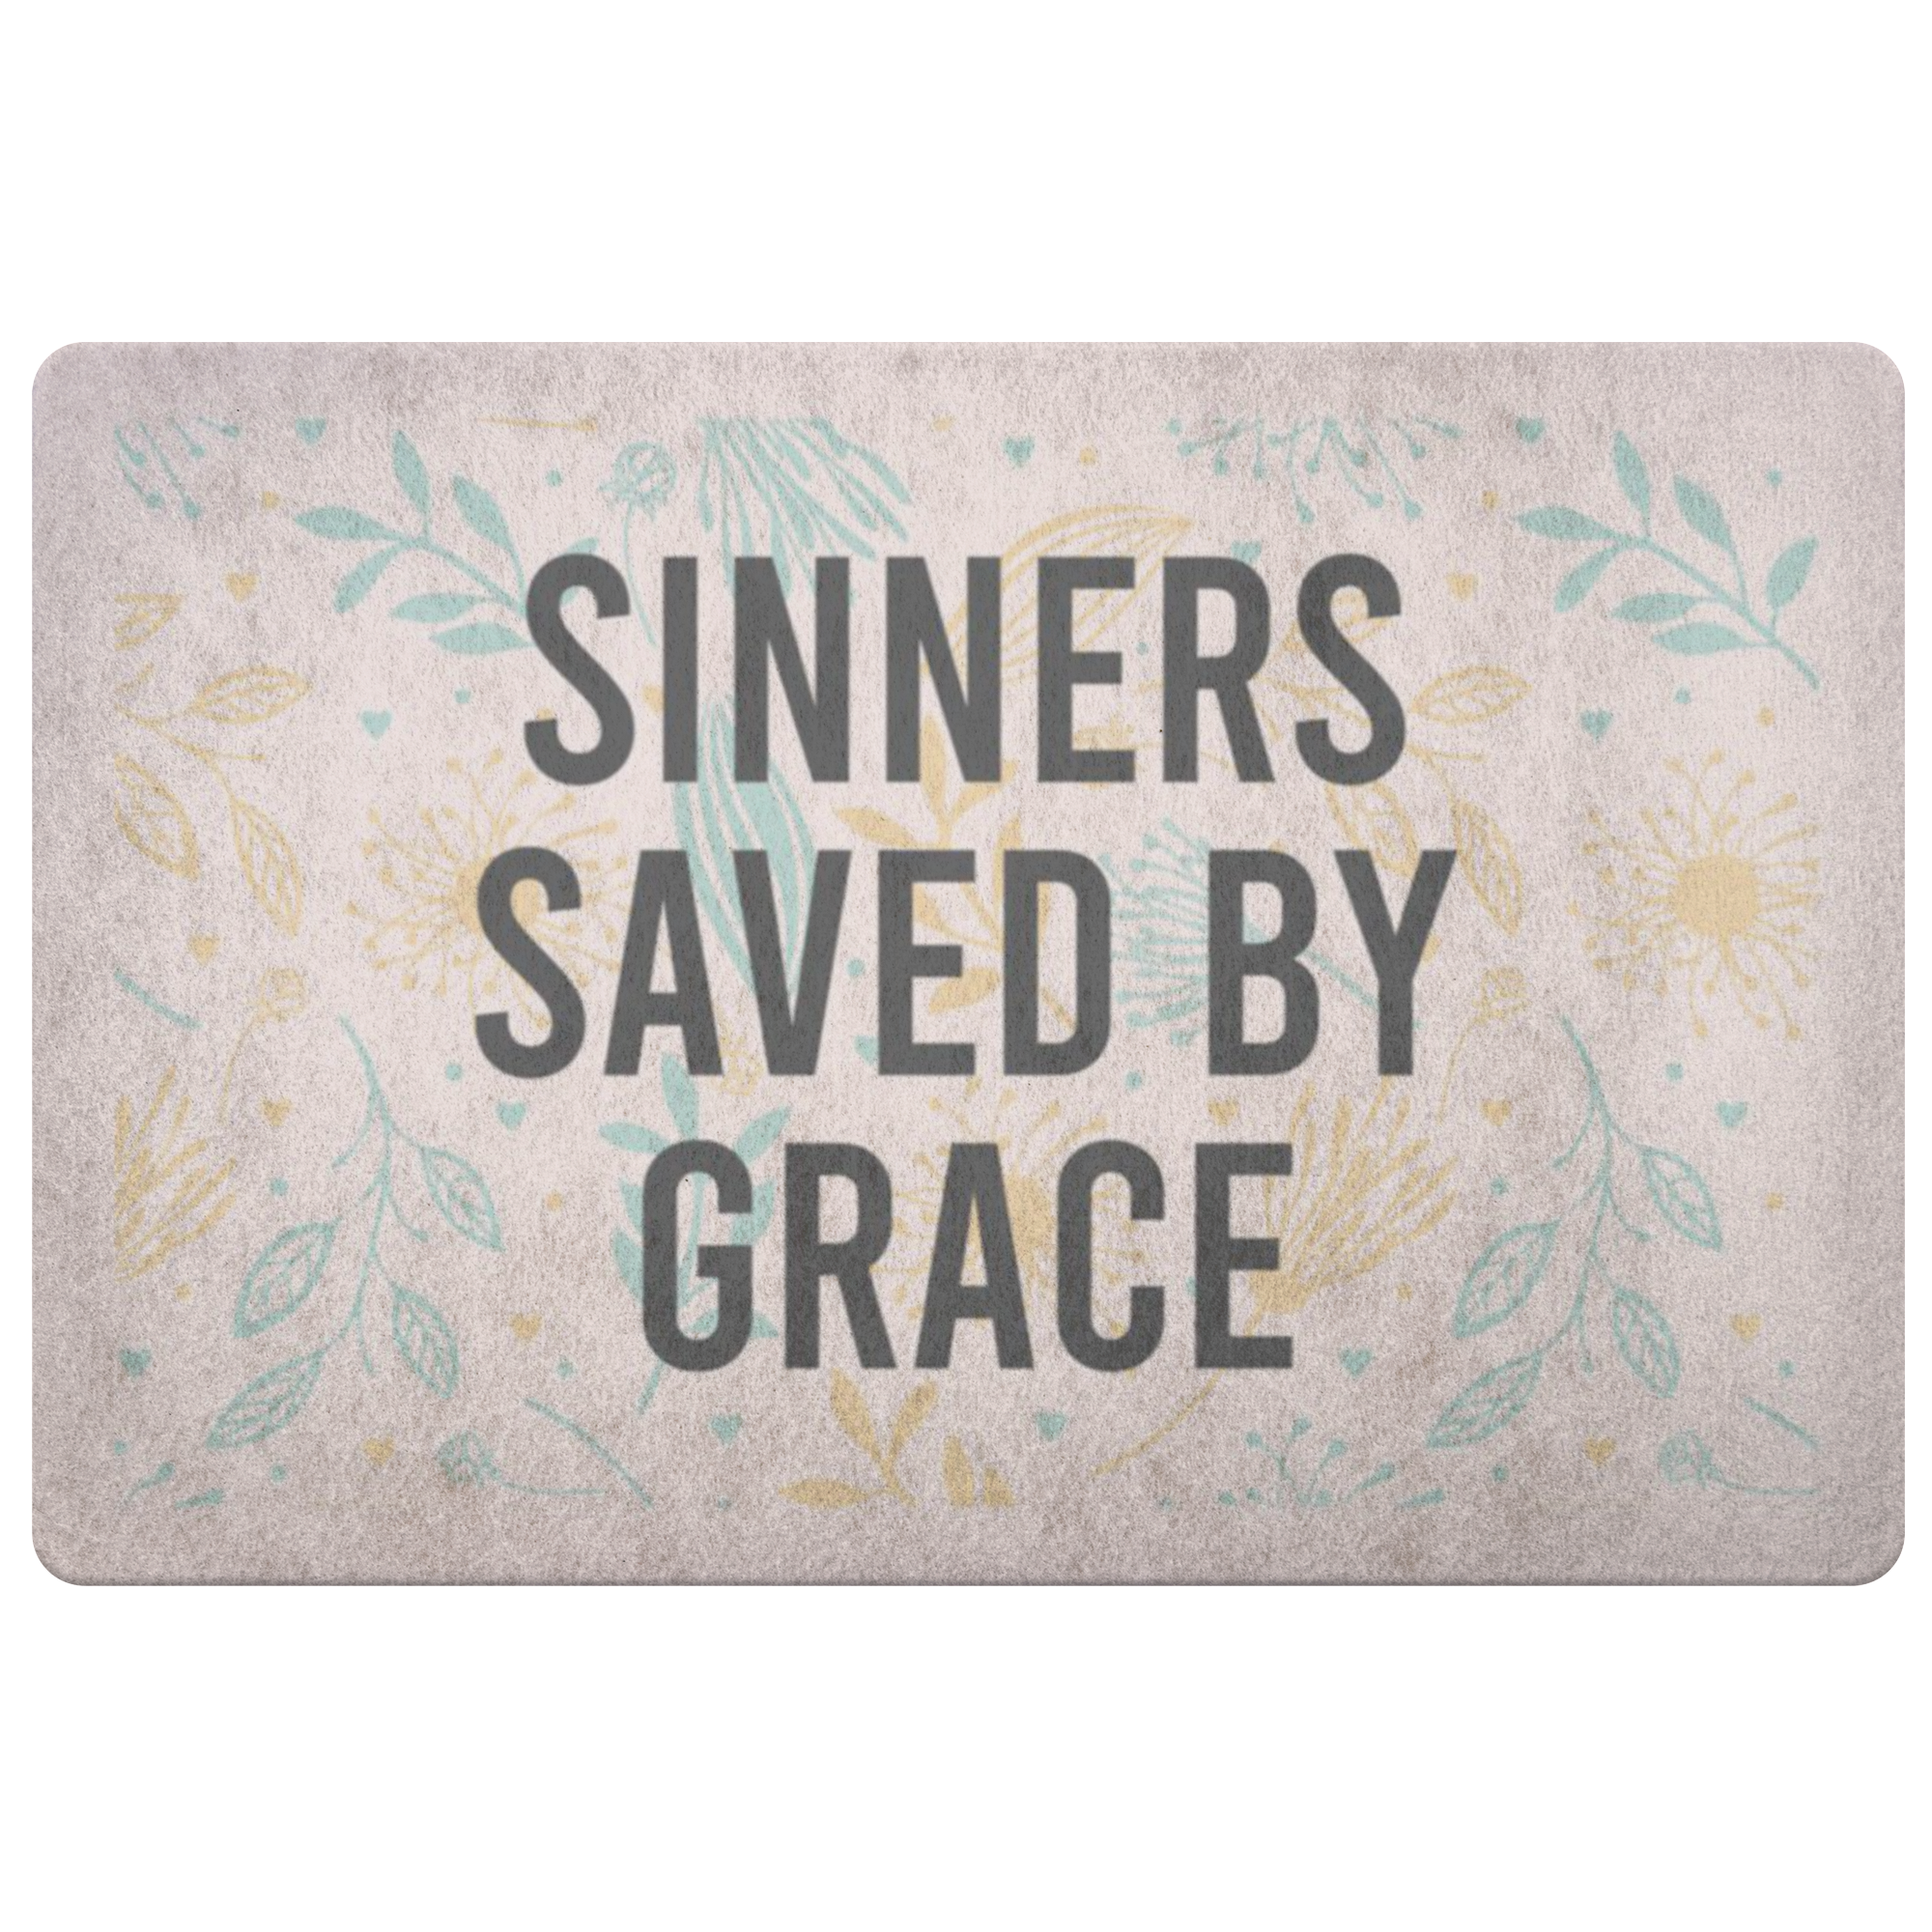 Sinners Saved By Grace (Doormat)